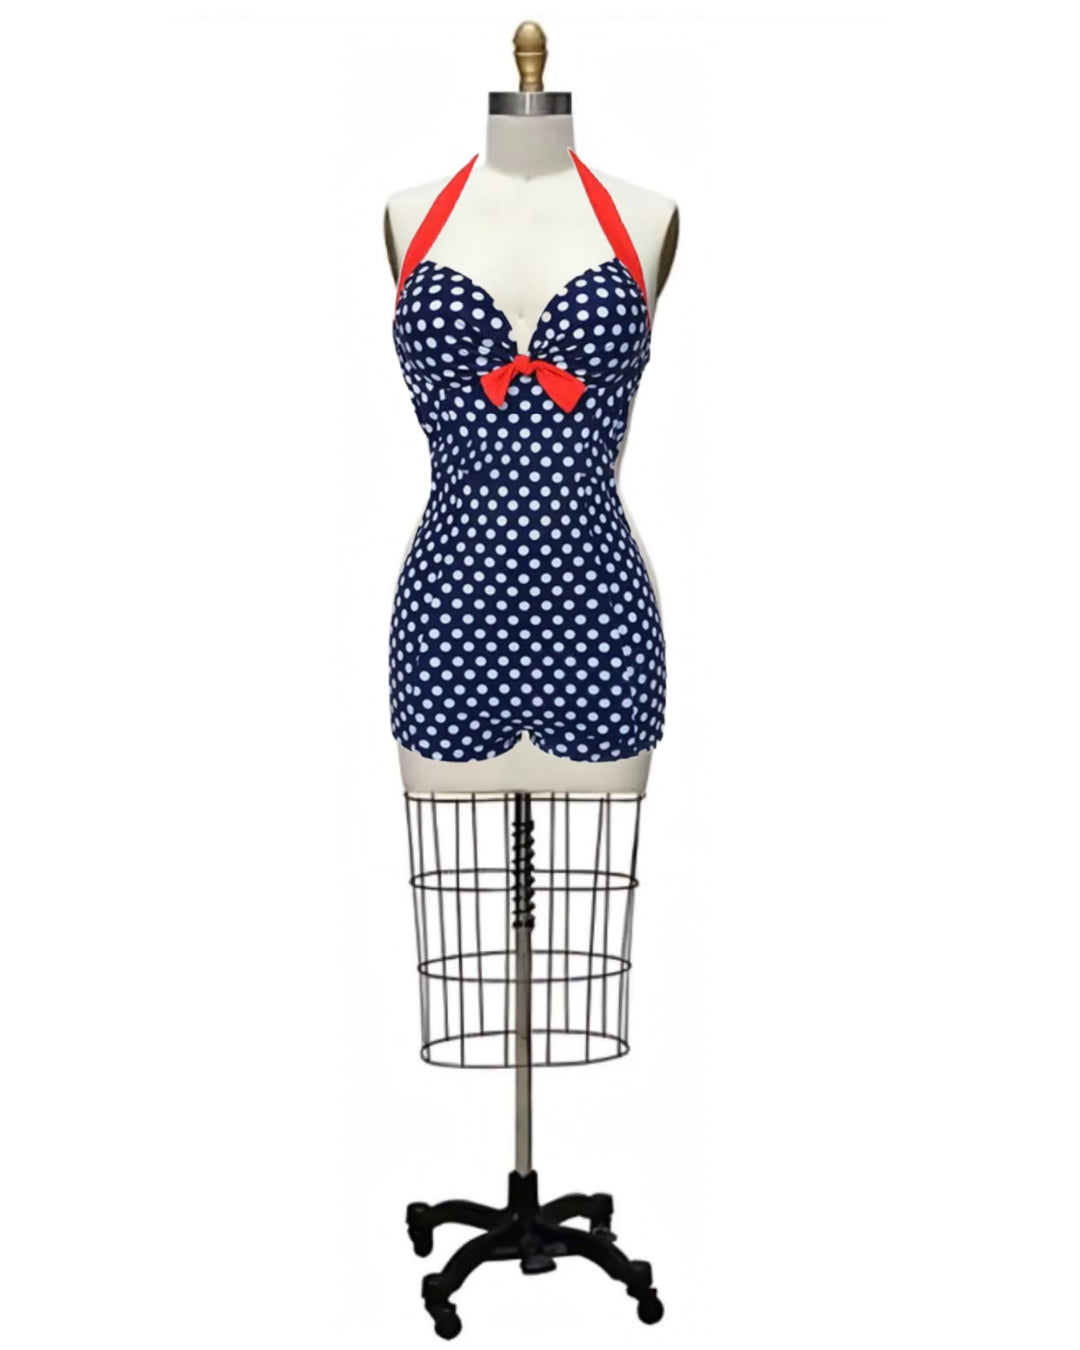 Calender Girl- the Polka Dot (or Cherry) Print 1950s Style Swimsuit